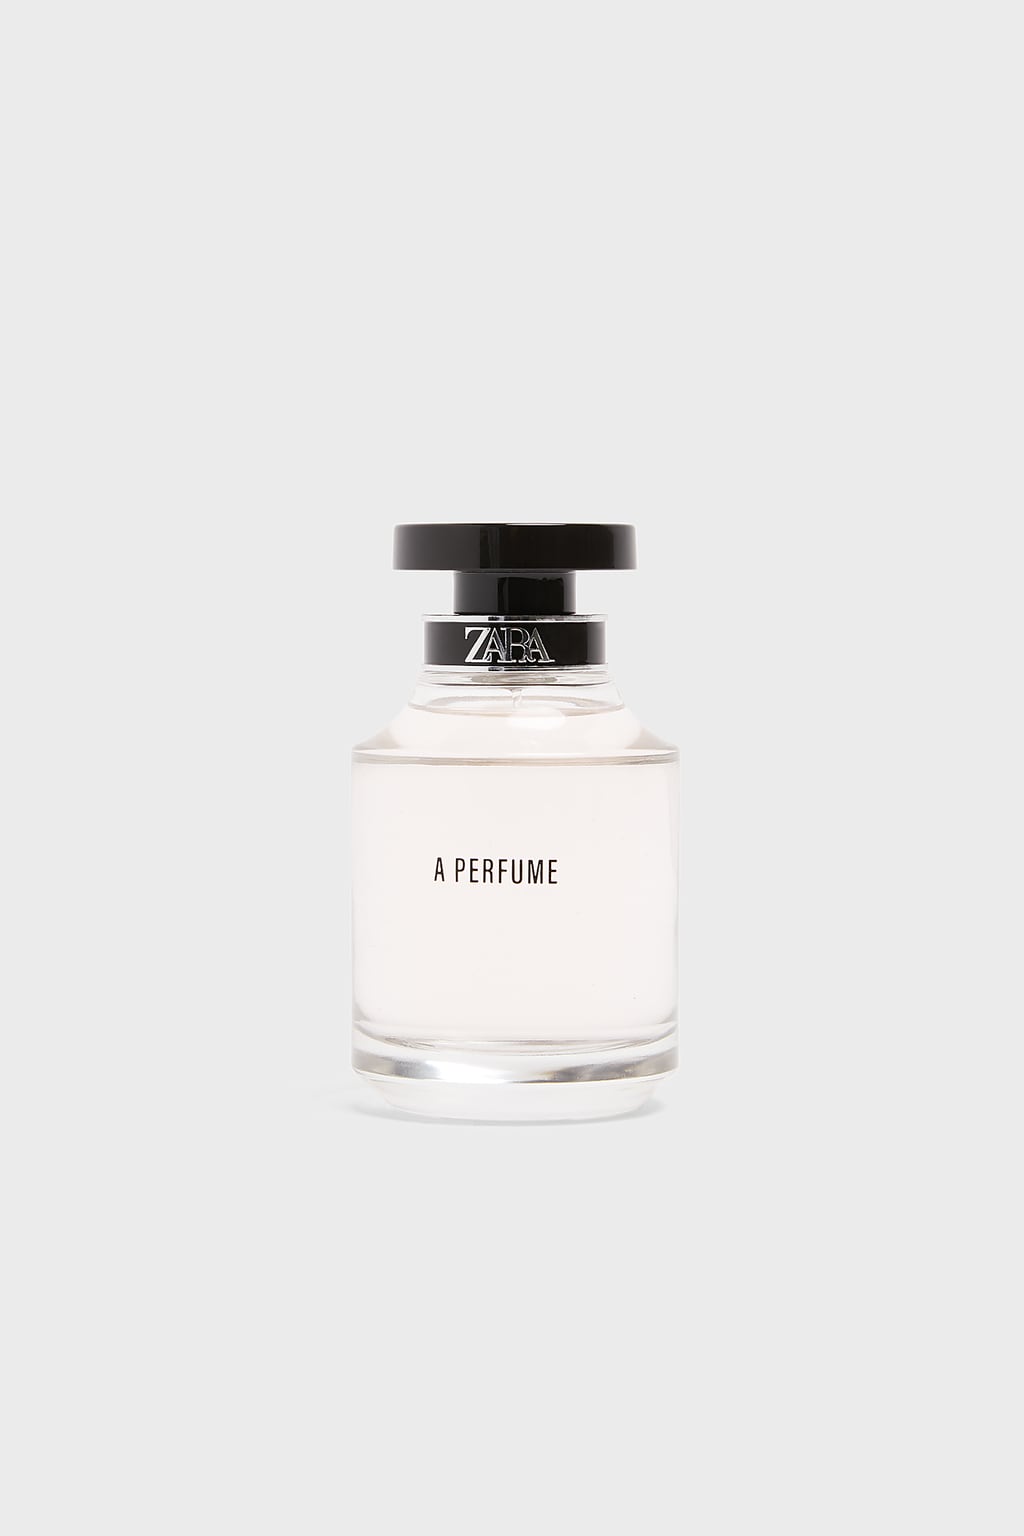 A Perfume Zara perfume - a new 